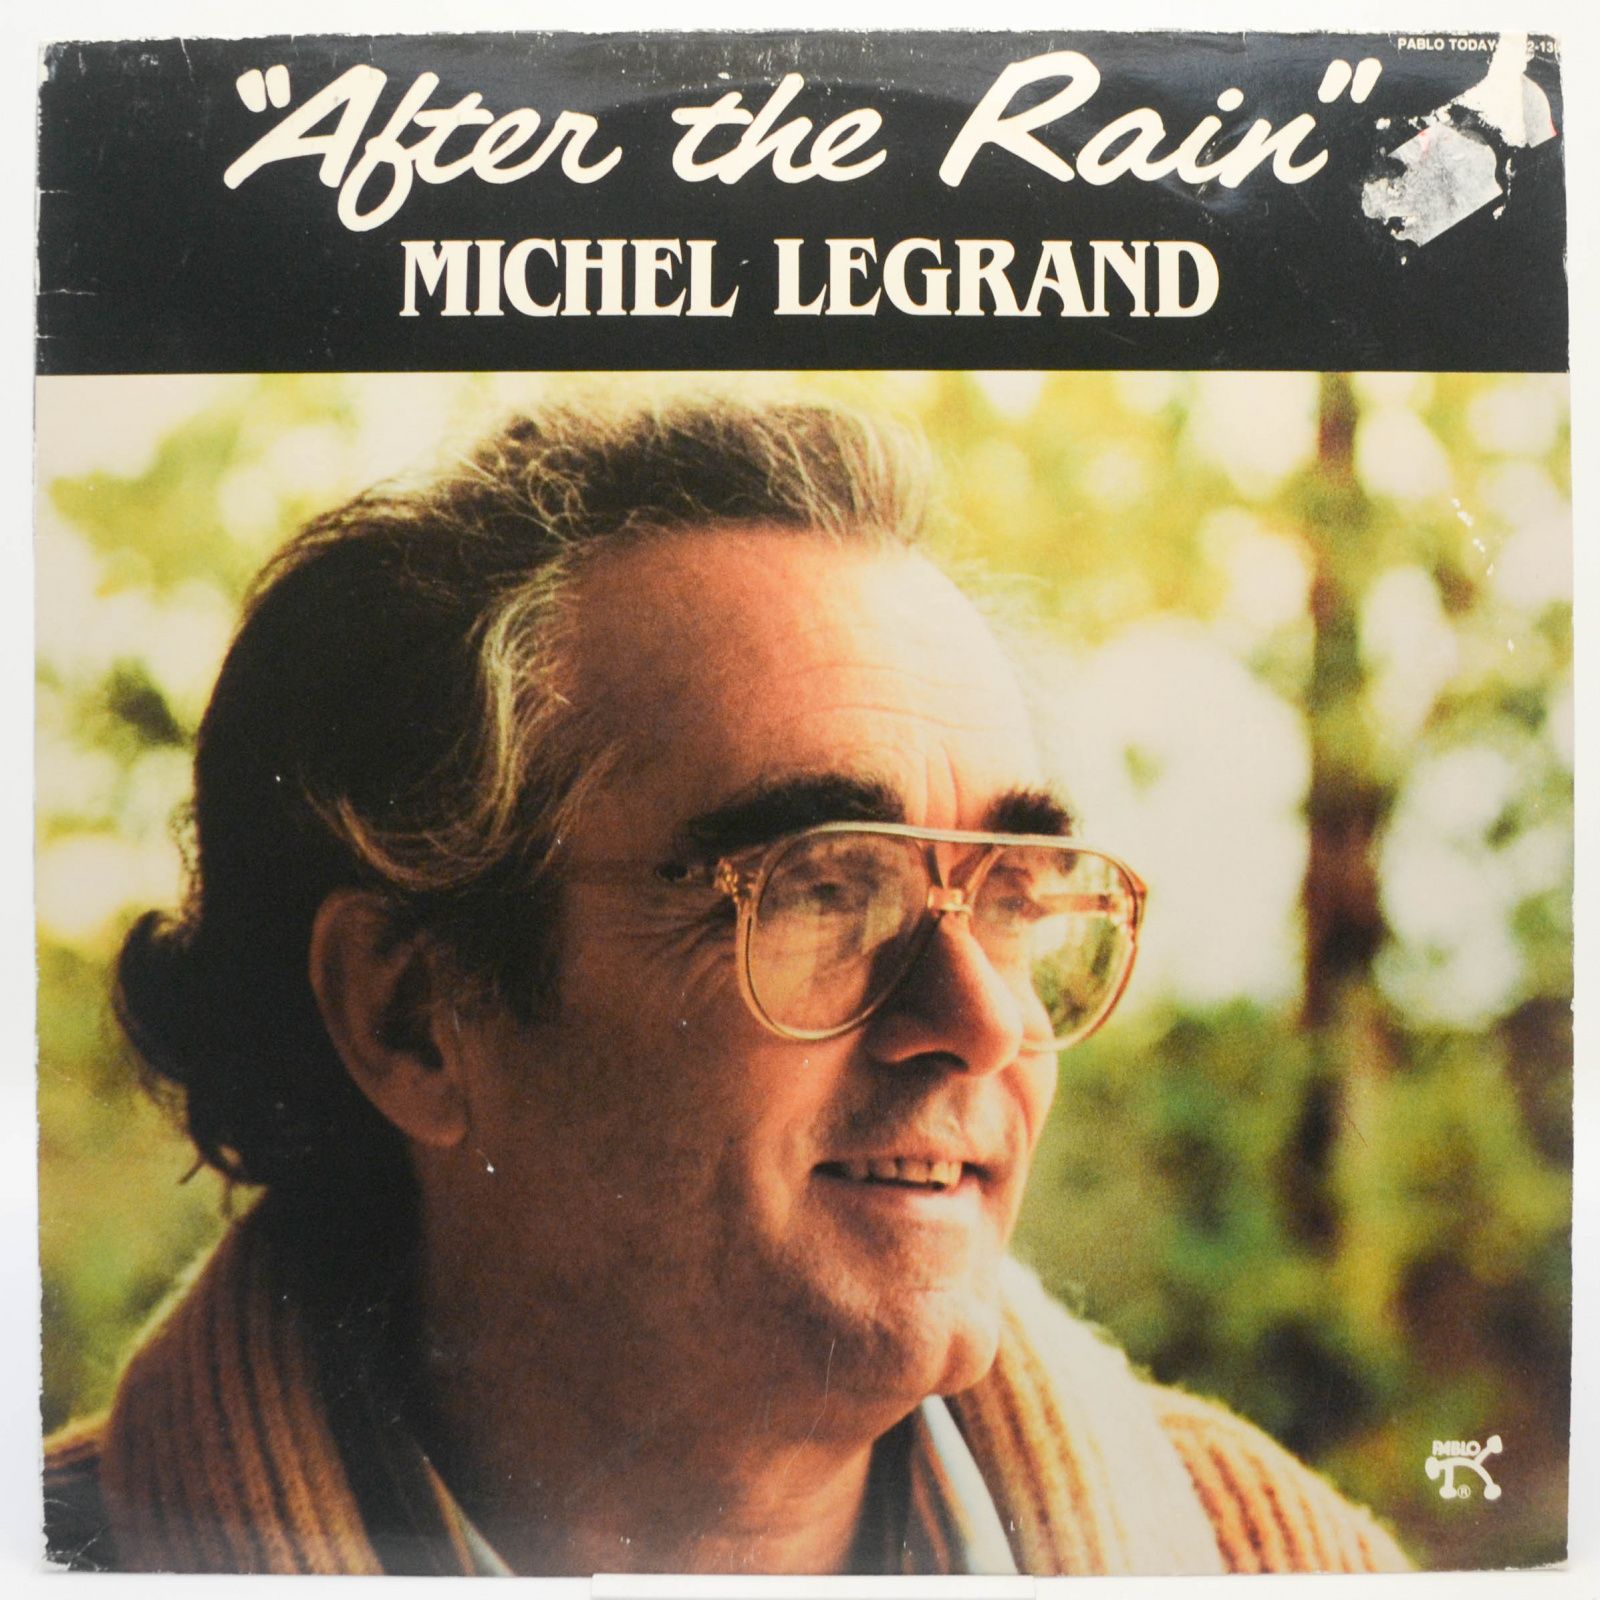 Michel Legrand — After The Rain, 1983